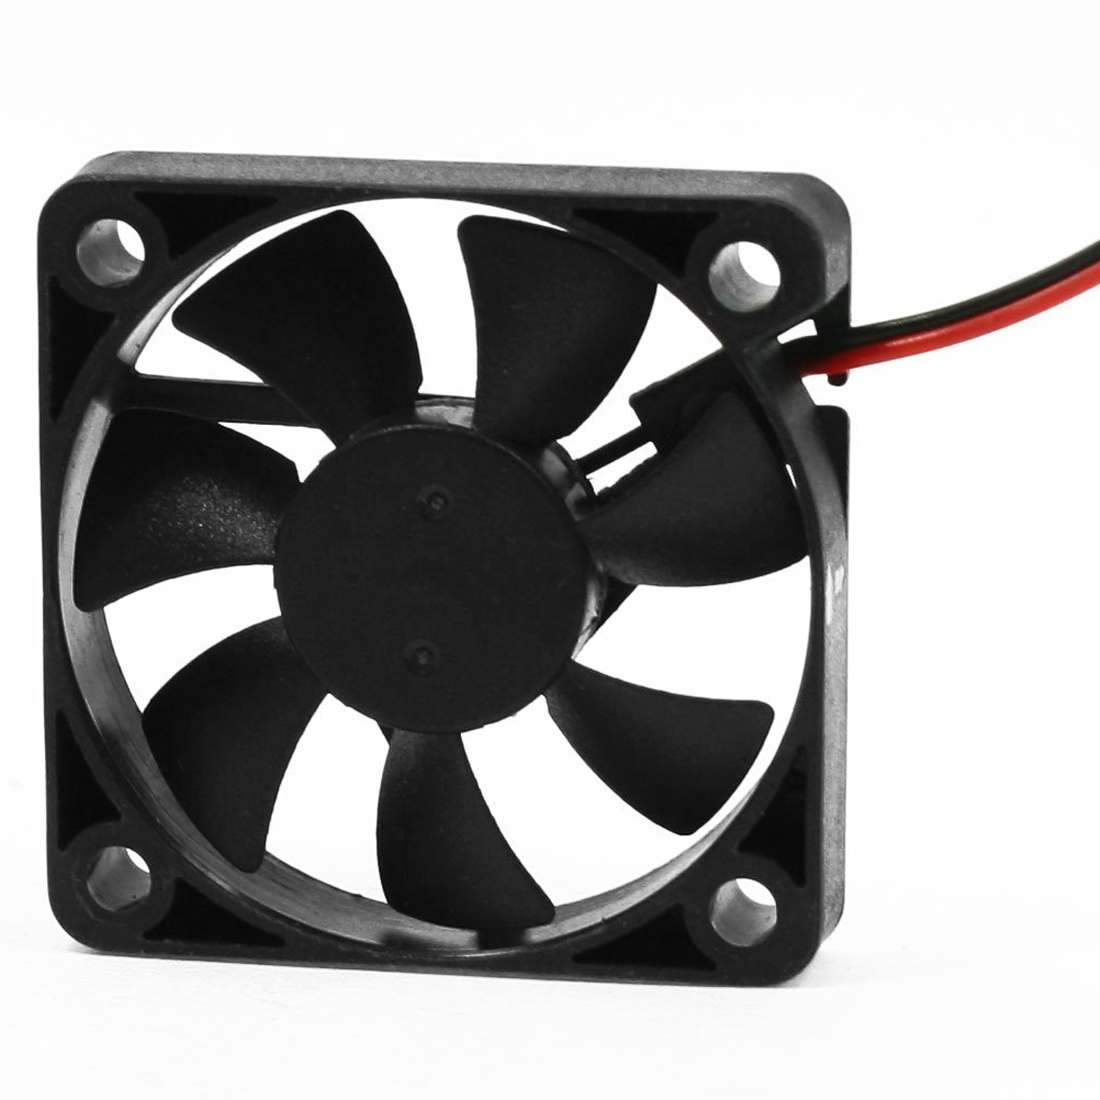 50mm x 50mm x 10mm 5010 DC 12V 0.1A 2Pin Brushless Cooling Fan